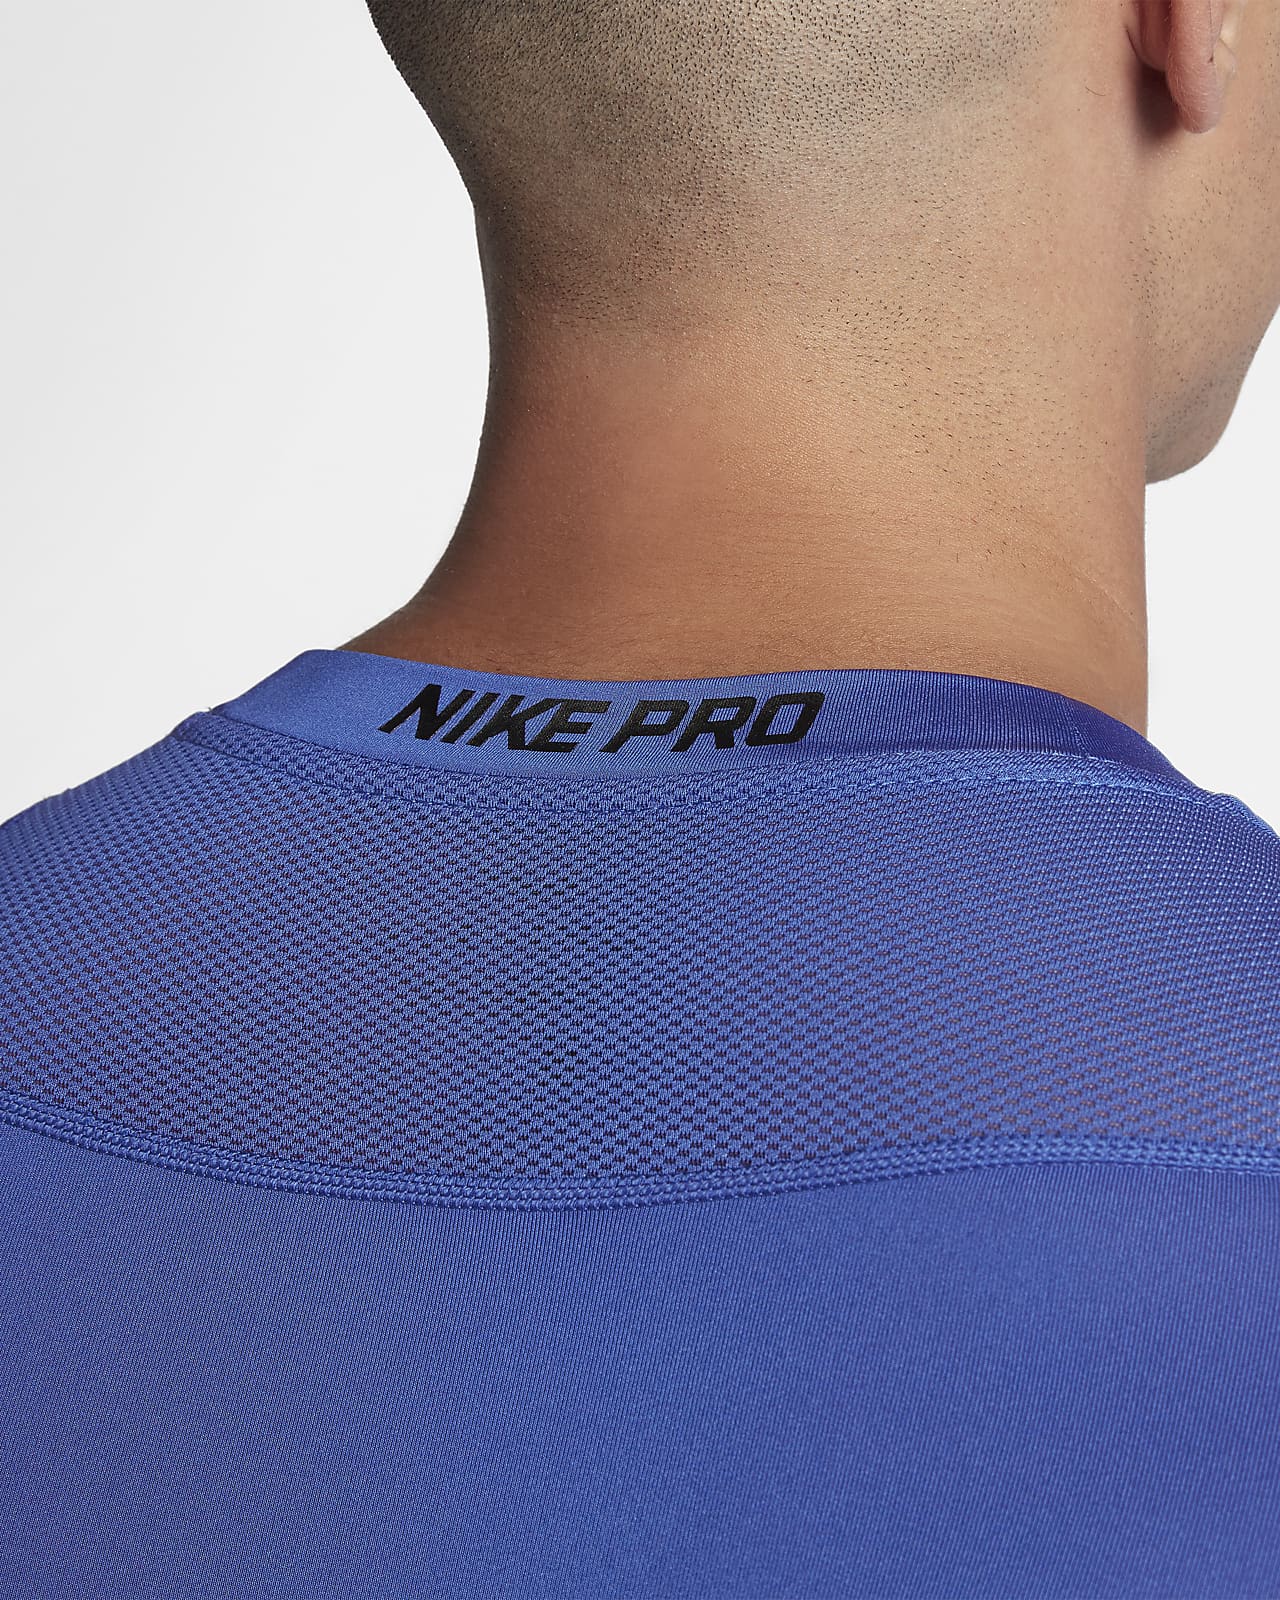 nike pro men's short sleeve training top